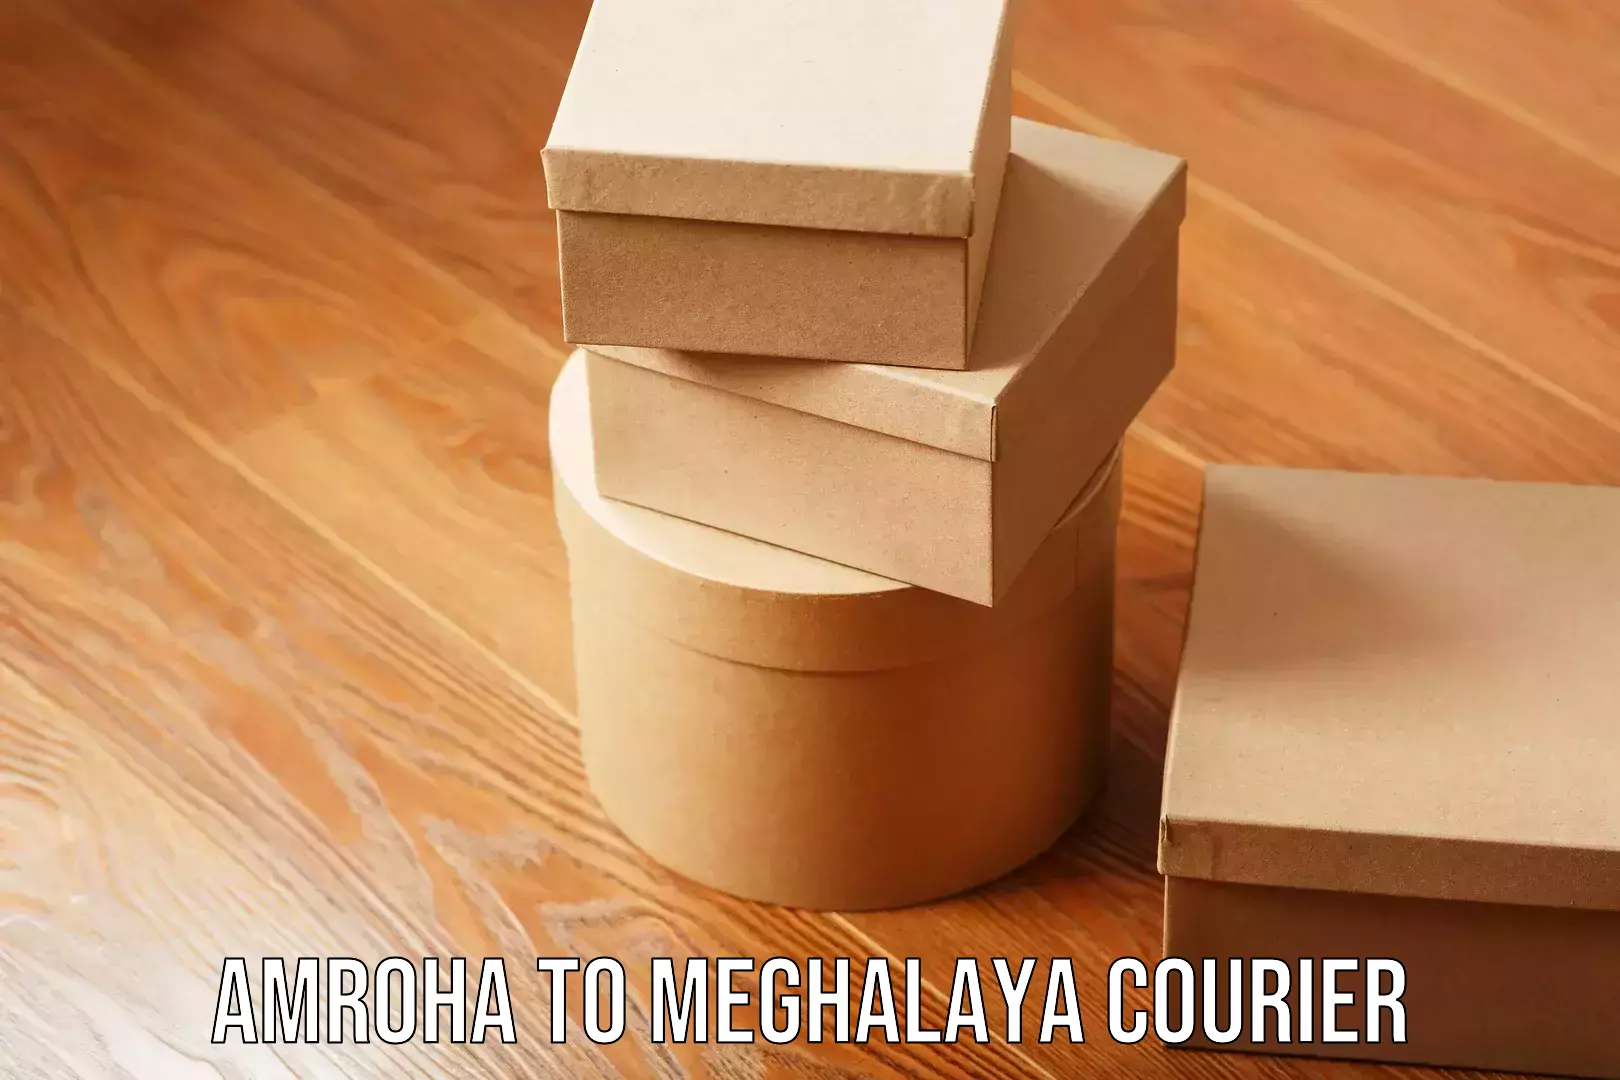 Digital courier platforms Amroha to Meghalaya